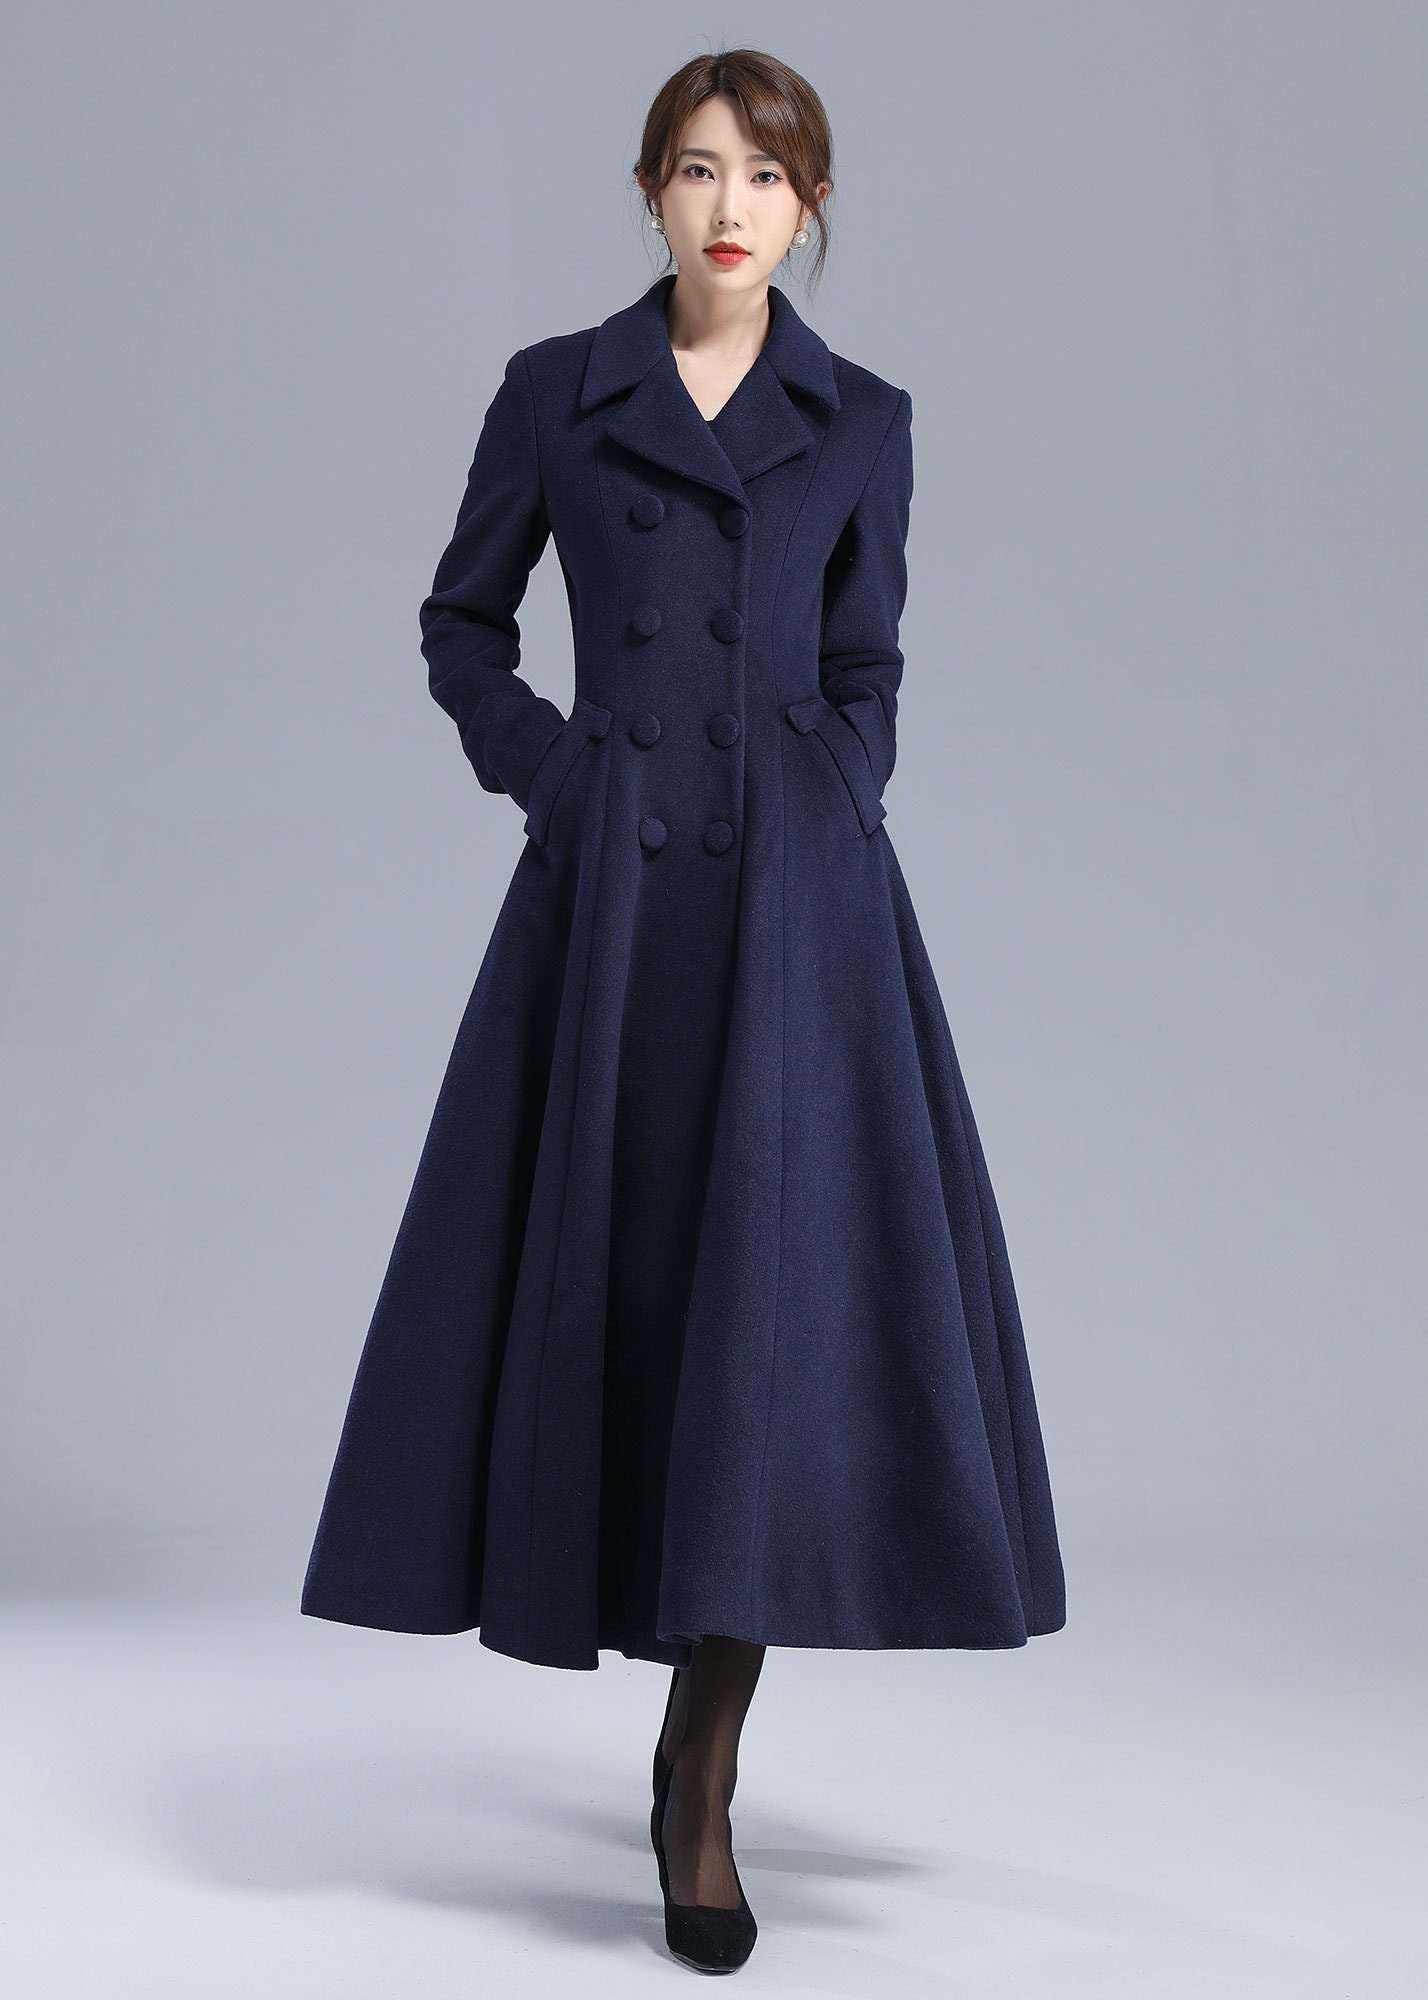 Women's Double Breasted Long Wool Coat, Vintage Inspired Wool Winter Coat,  Fit and Flare Coat, Princess Coat, Dress Coat, Swing Coat 3208 -   Singapore